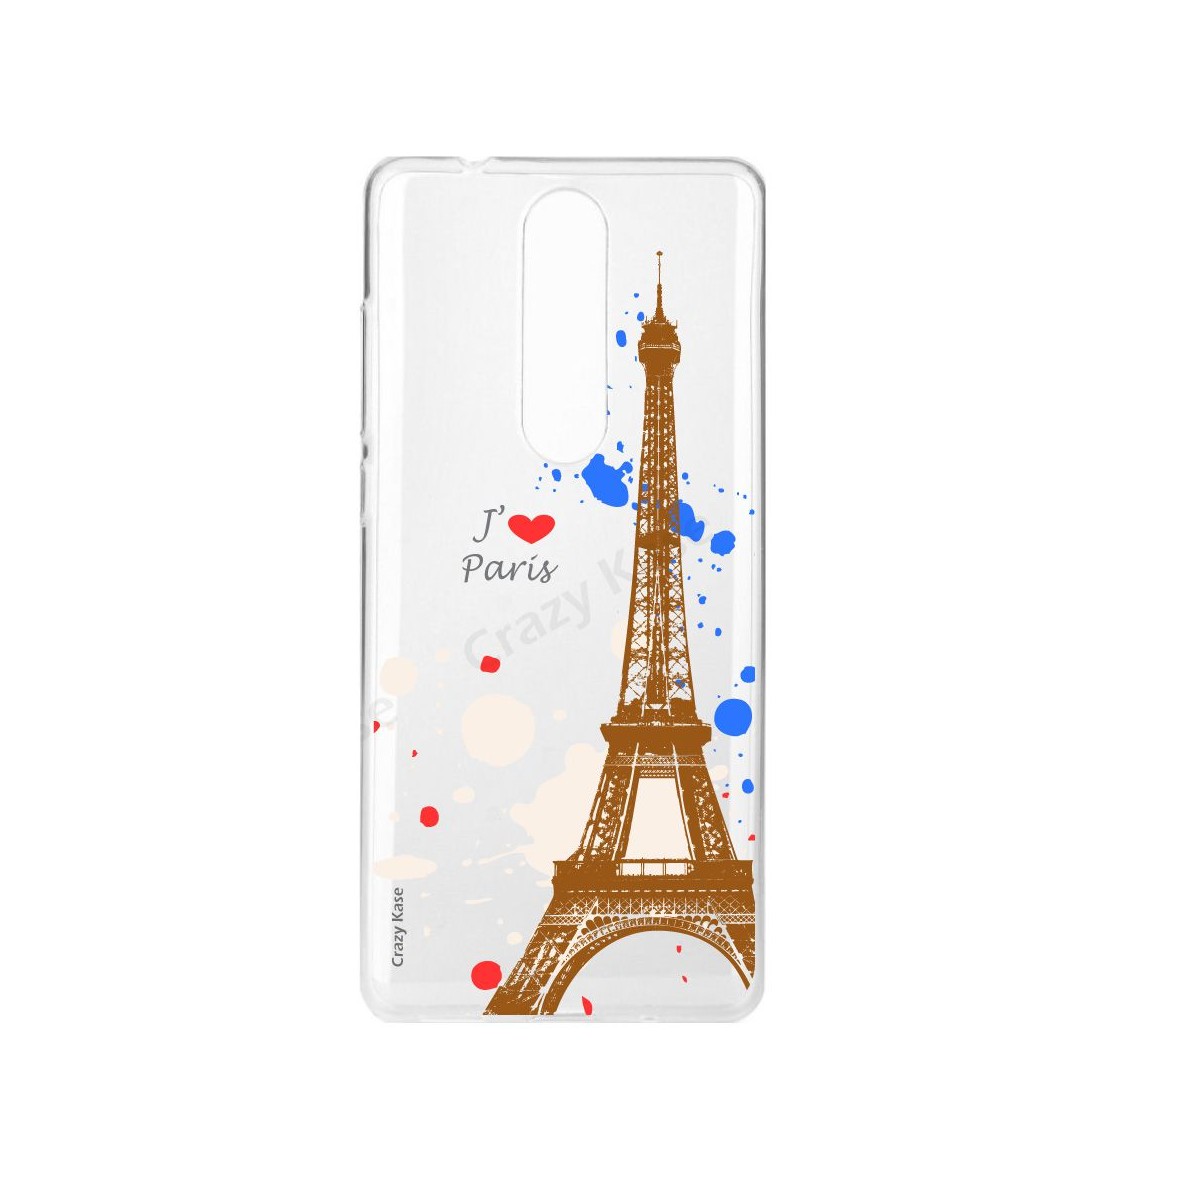 Coque compatible Nokia 5.1 souple Paris - Crazy Kase